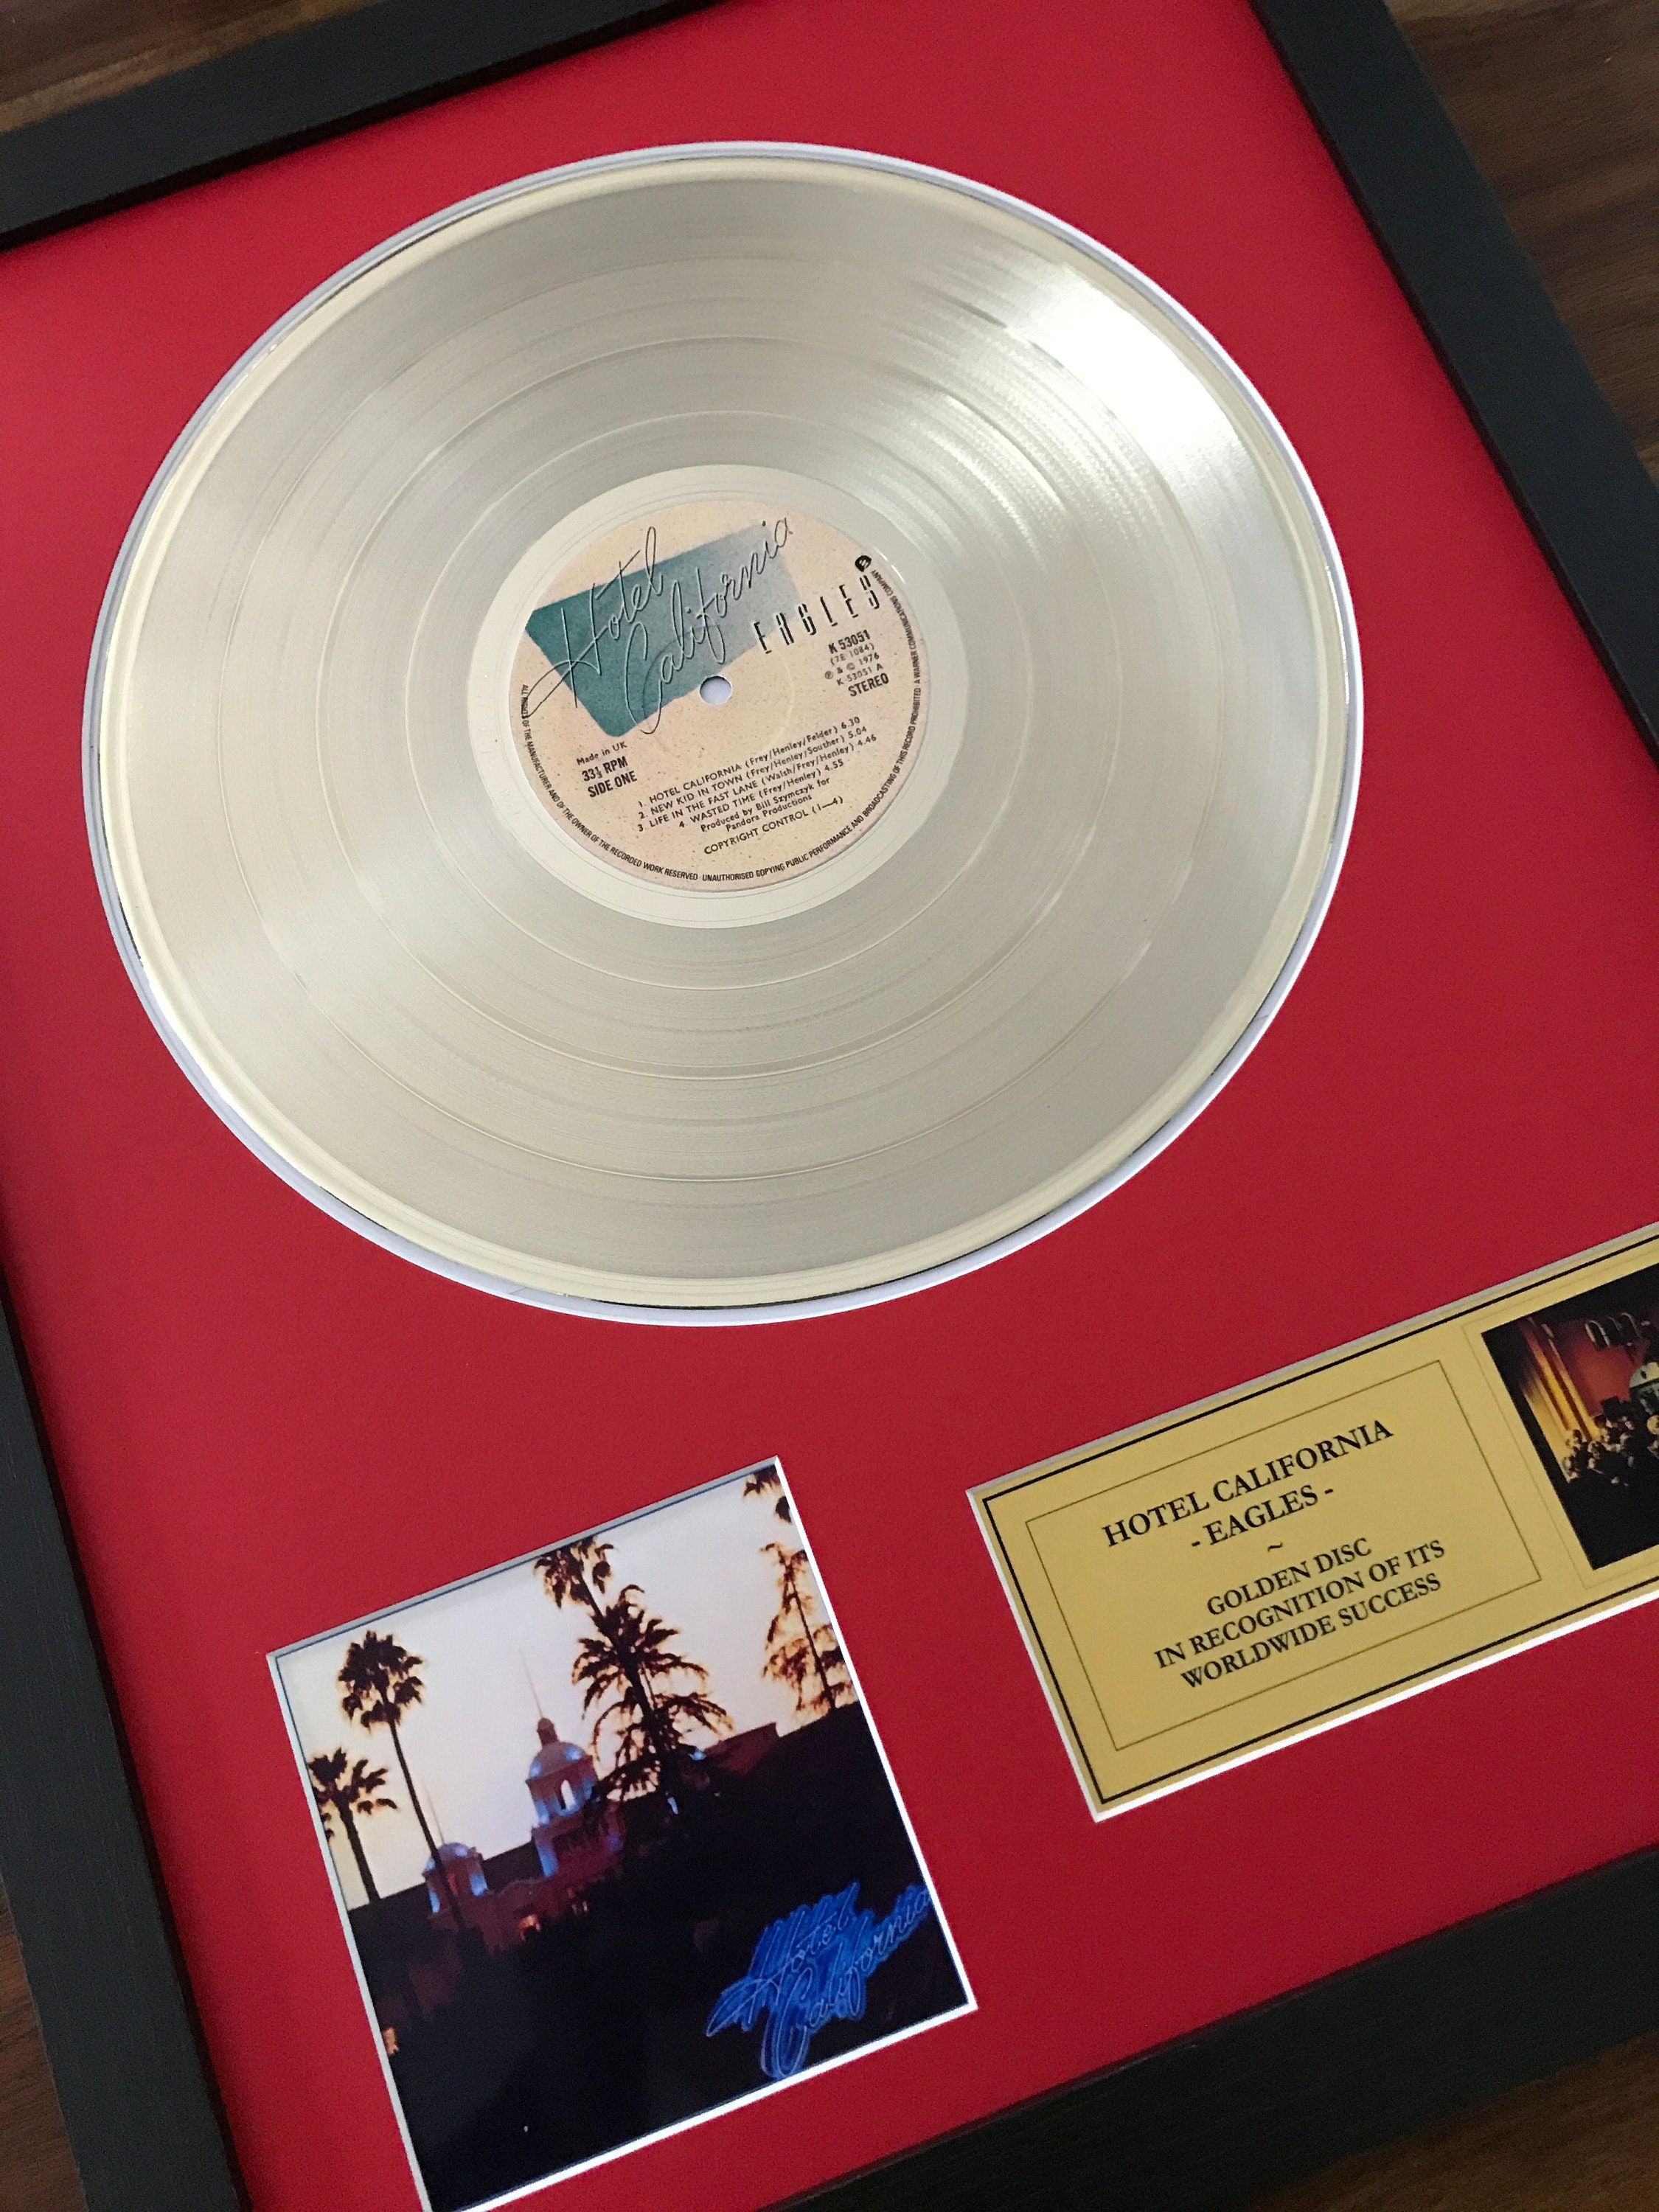 The Eagles Hotel California golden disc LP record